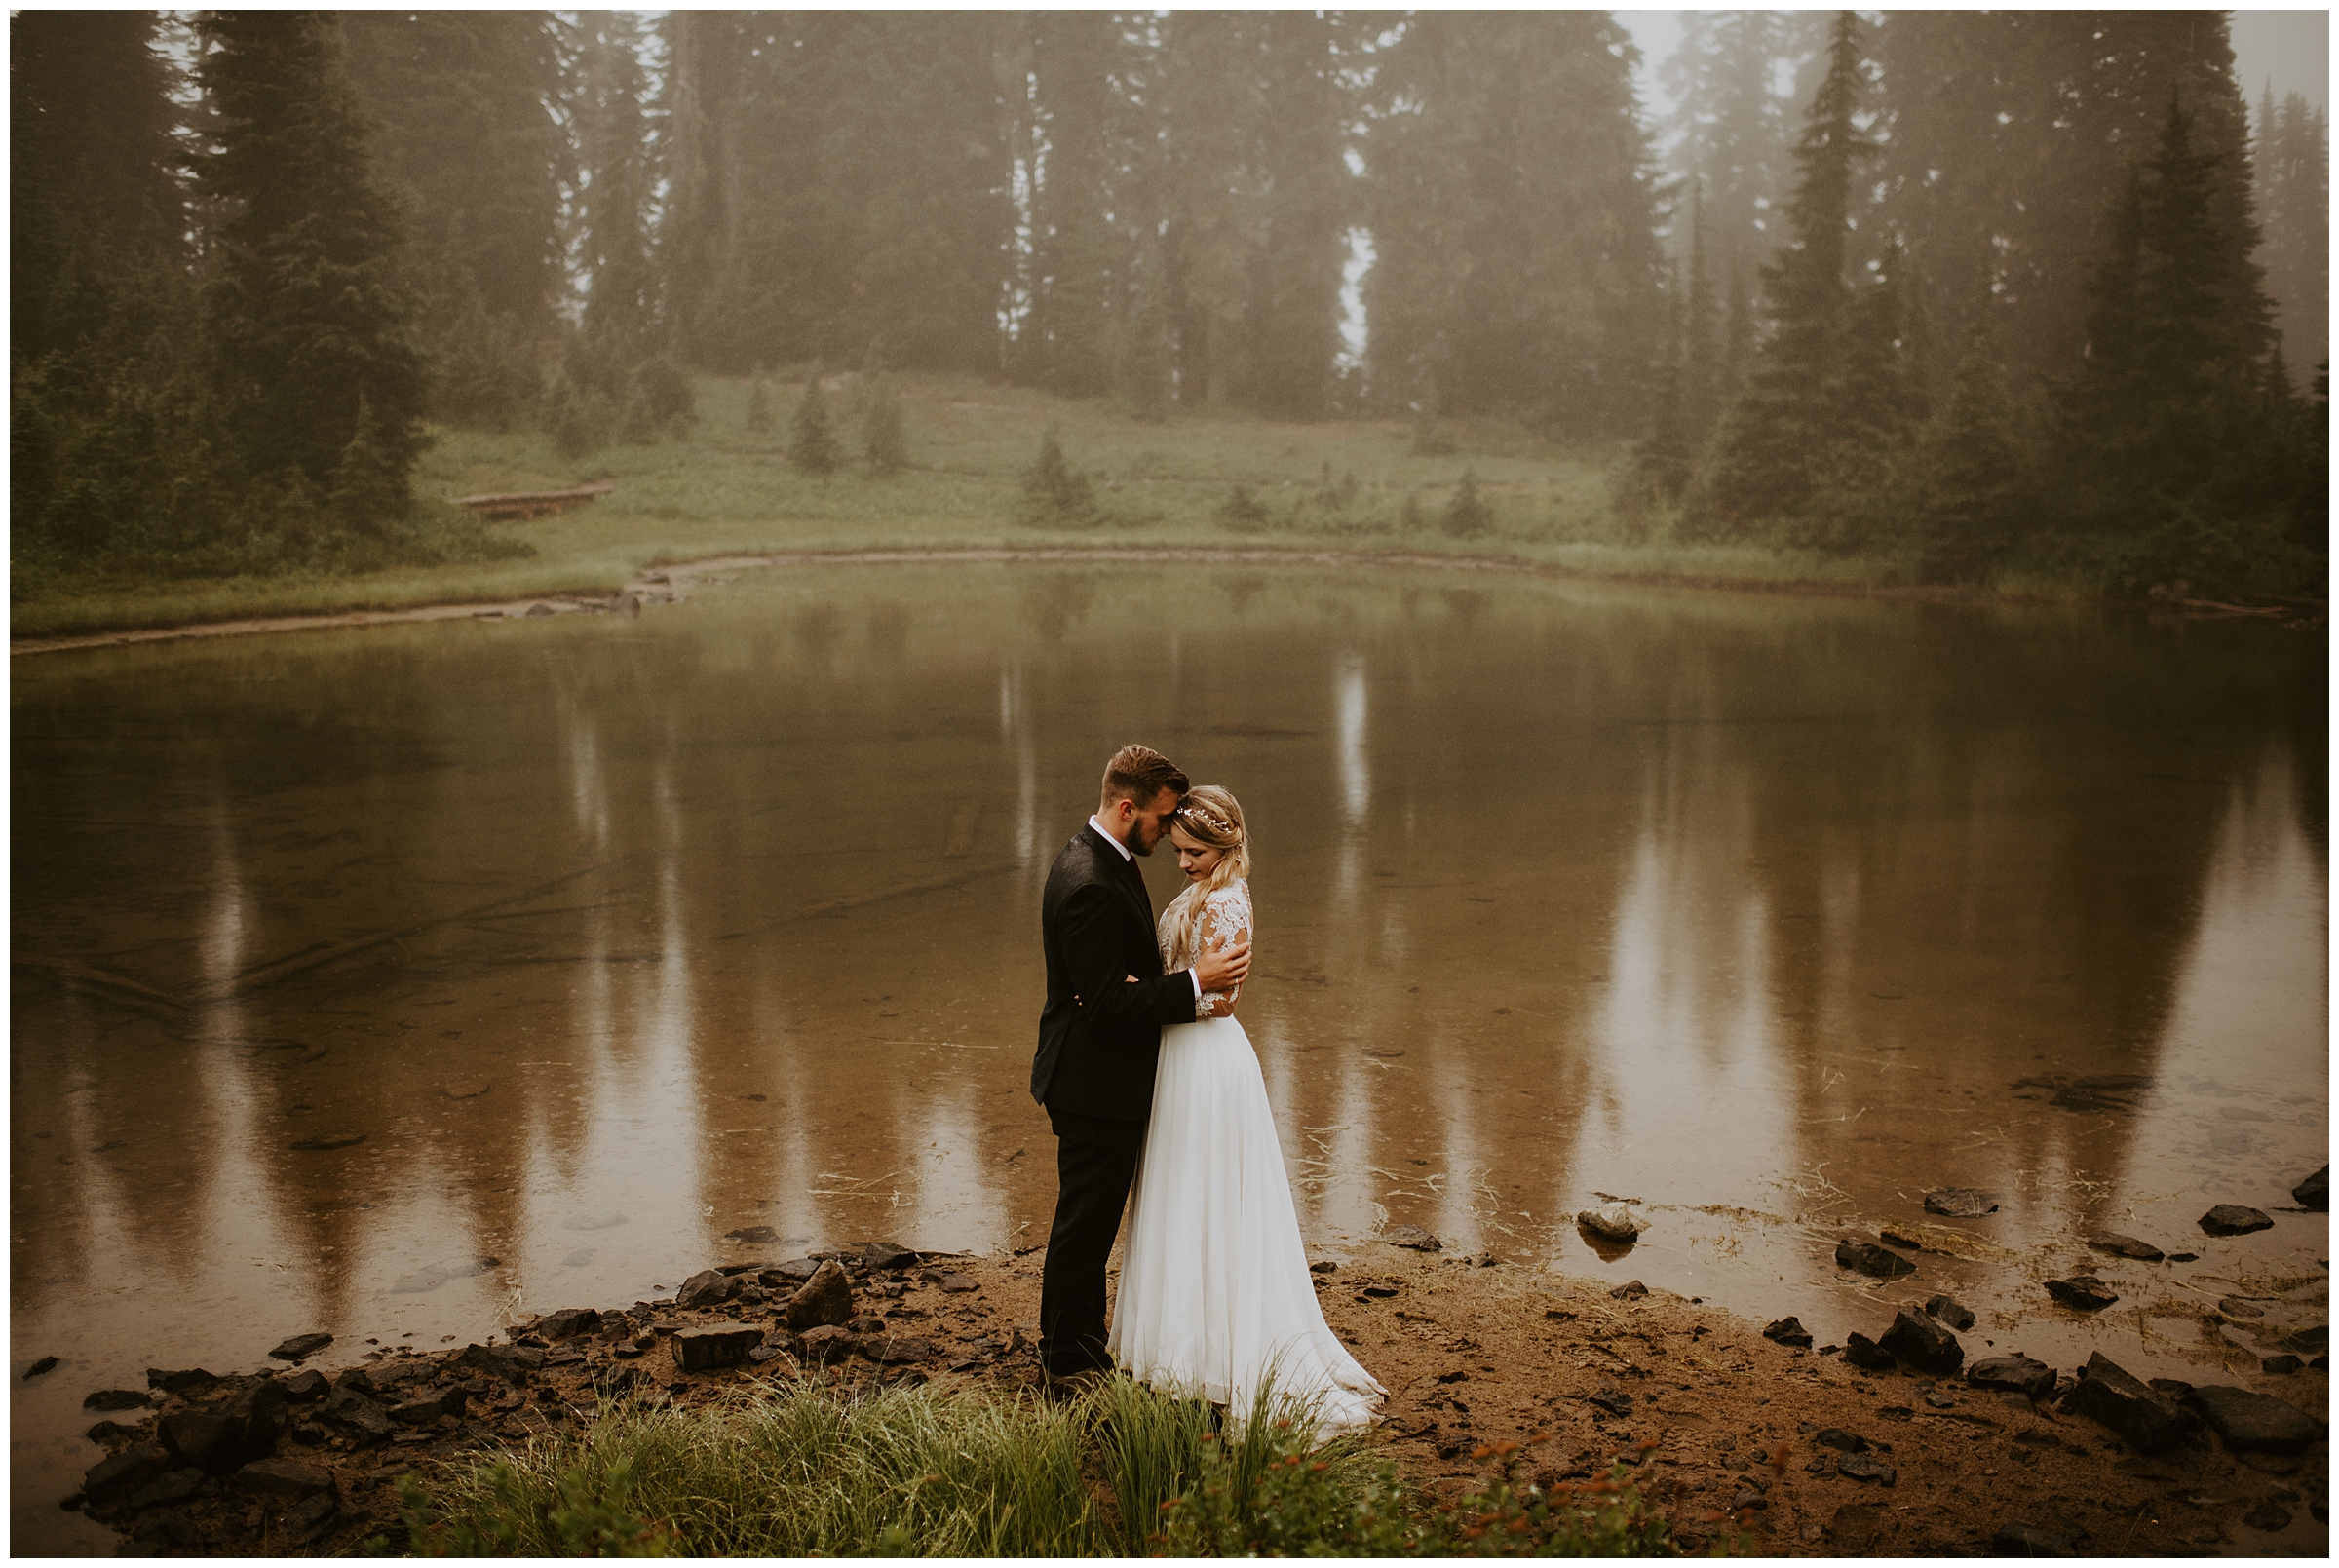 Cameo + Dawson's Foggy Mt. Rainier Wedding Portrait Session at Tipsoo Lake, WA by Seattle Elopement Photographer, Kamra Fuller Photography